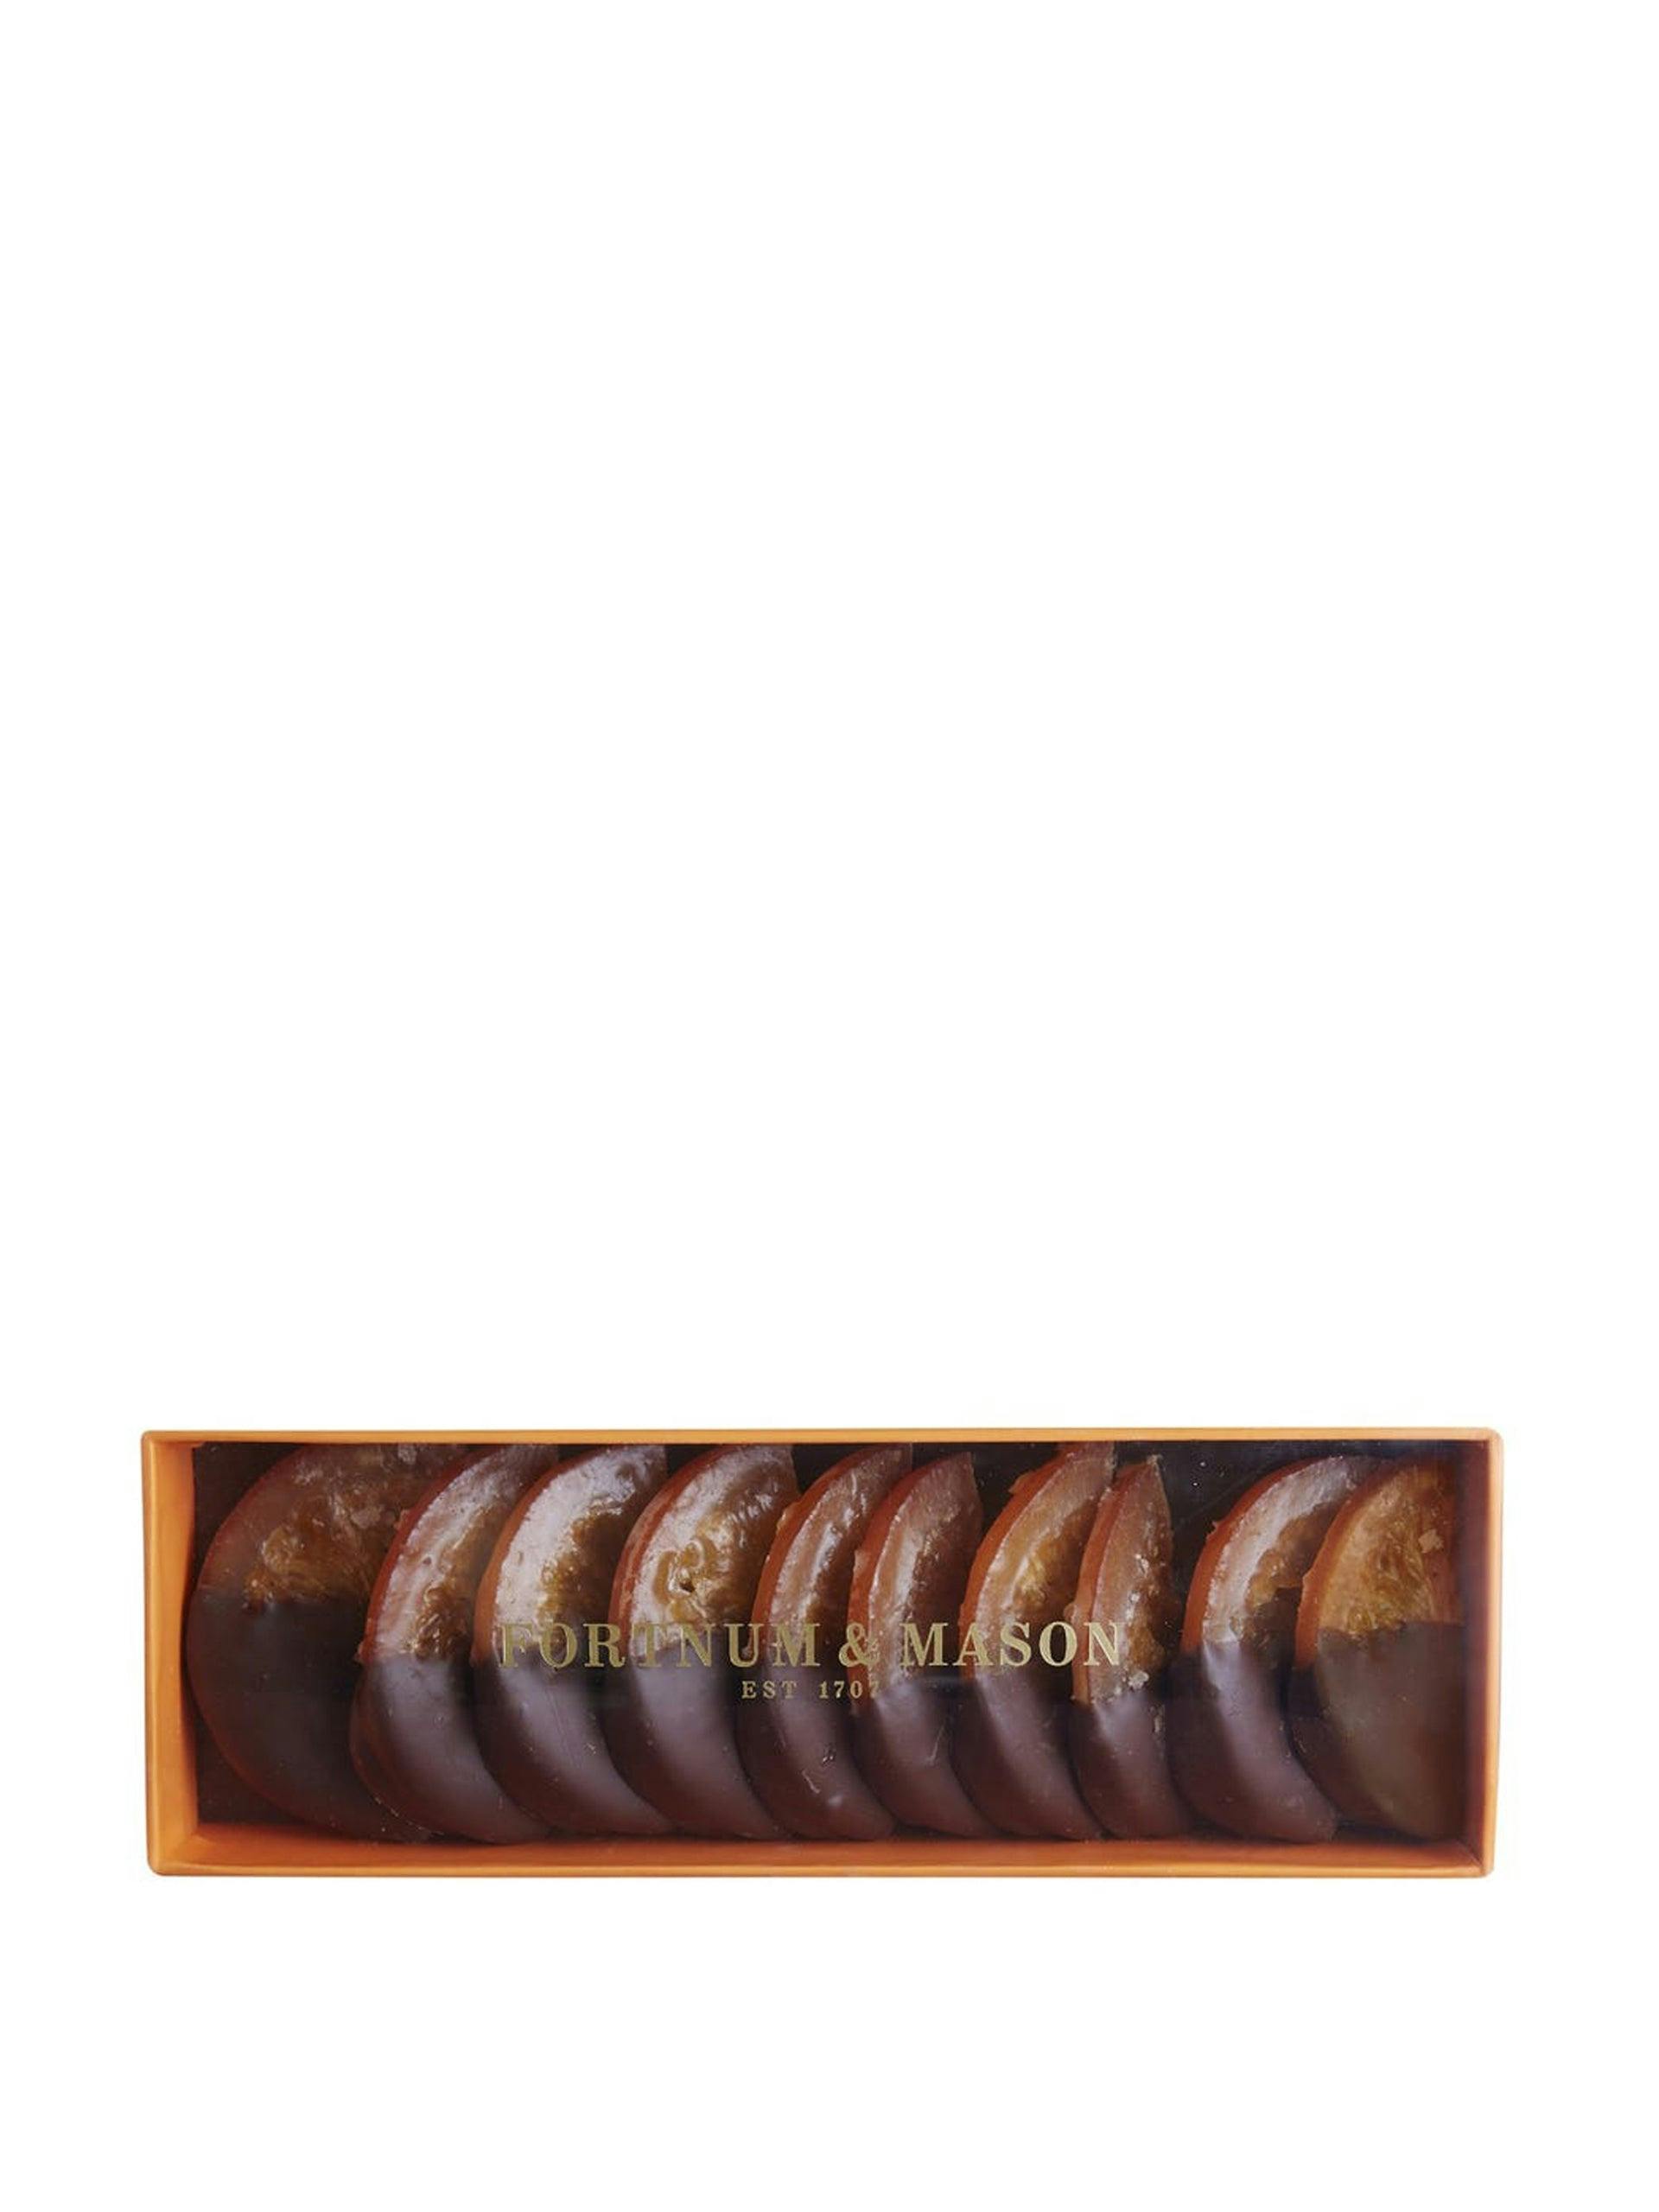 Chocolate-dipped orange slices